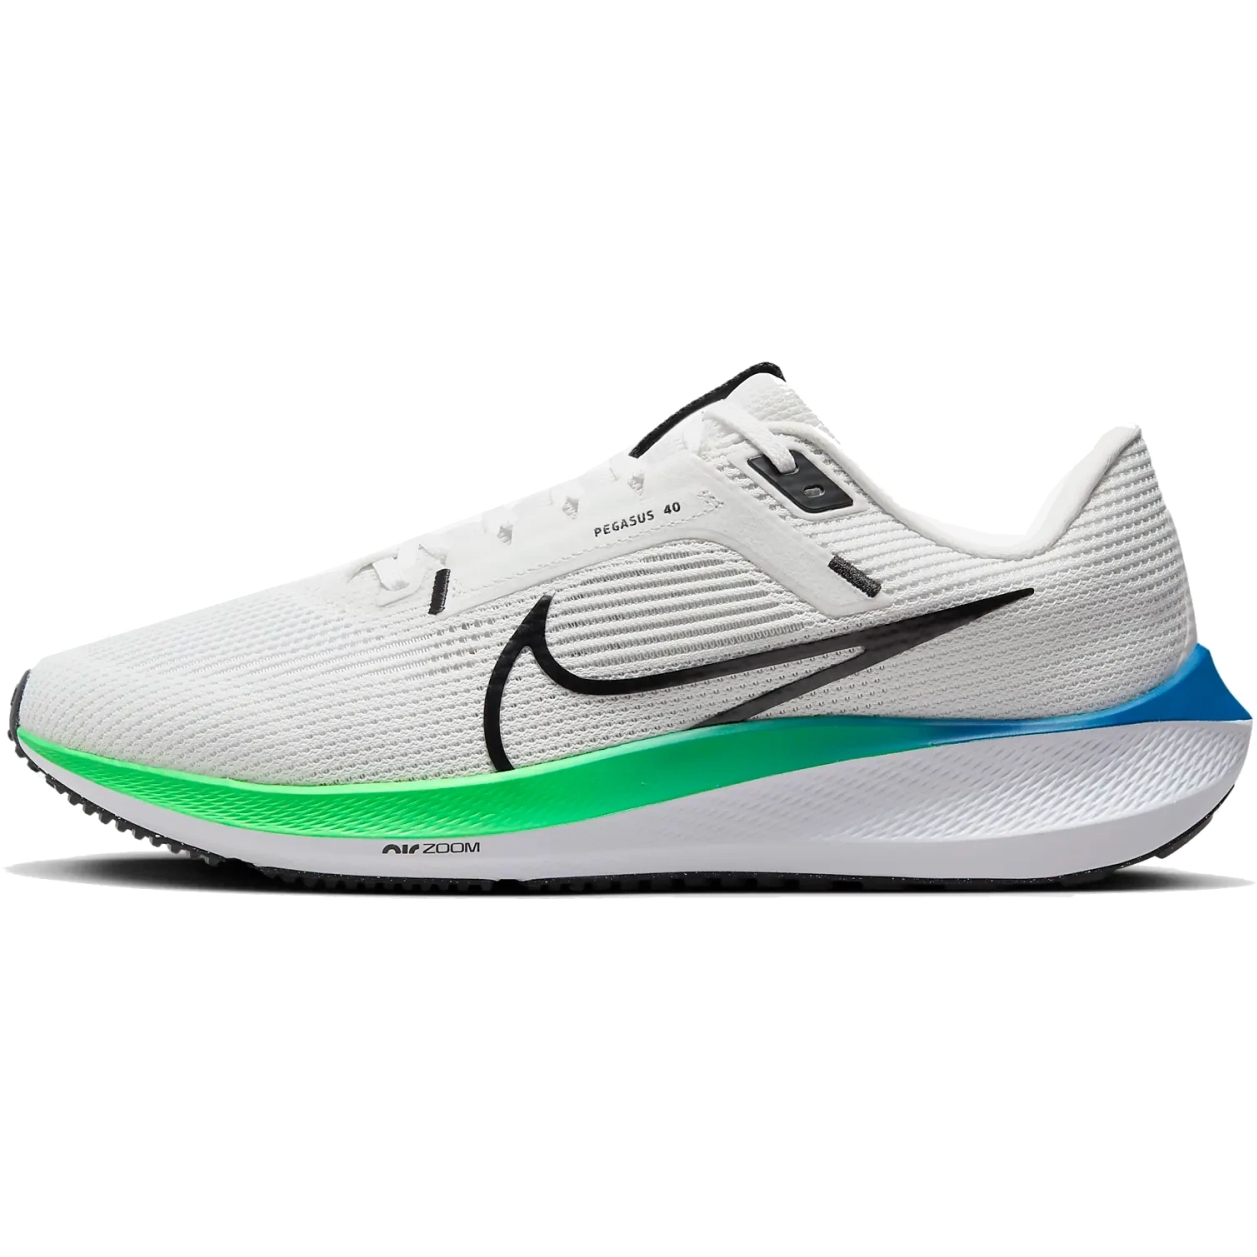 Productfoto van Nike Air Zoom Pegasus 40 Hardloopschoenen Heren - platinum tint/white/green strike/black DV3853-006